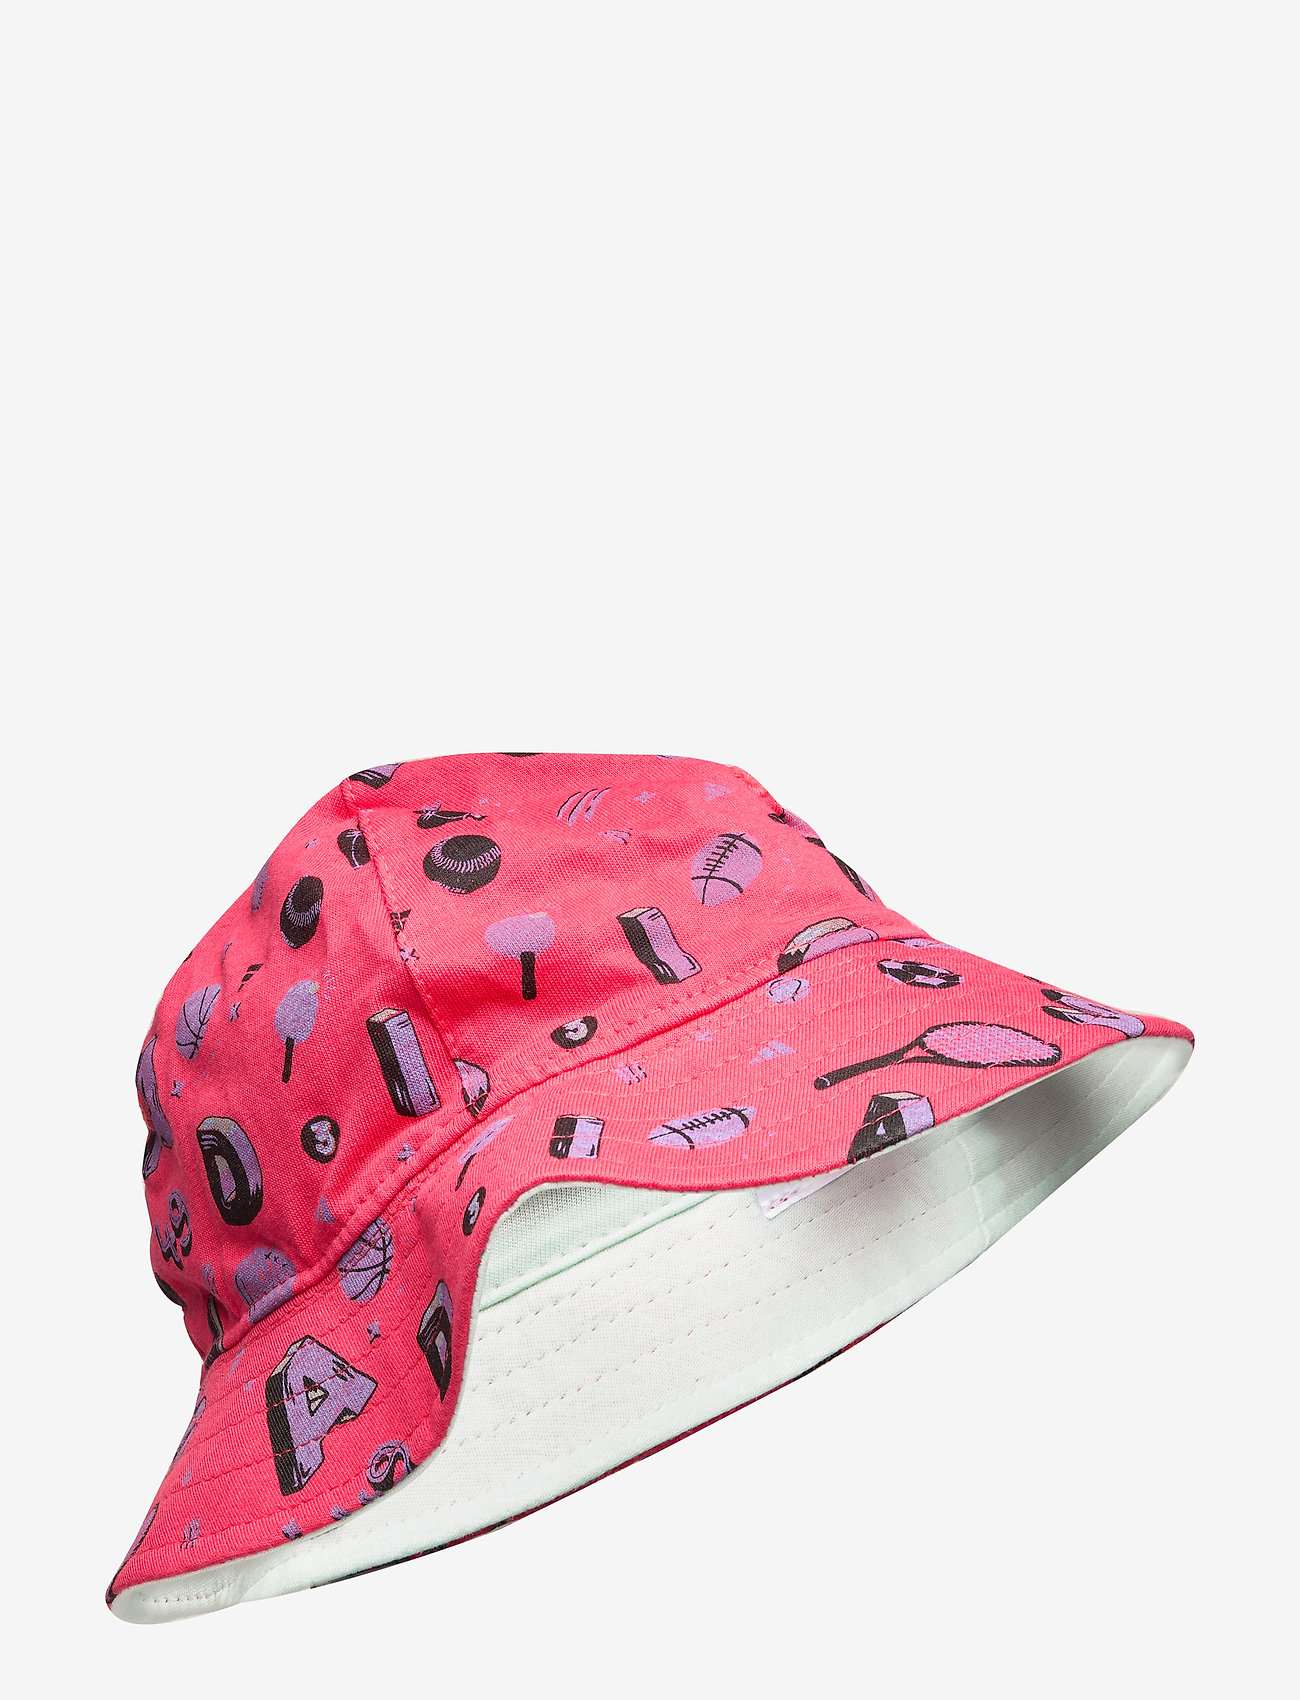 pink bucket hat adidas